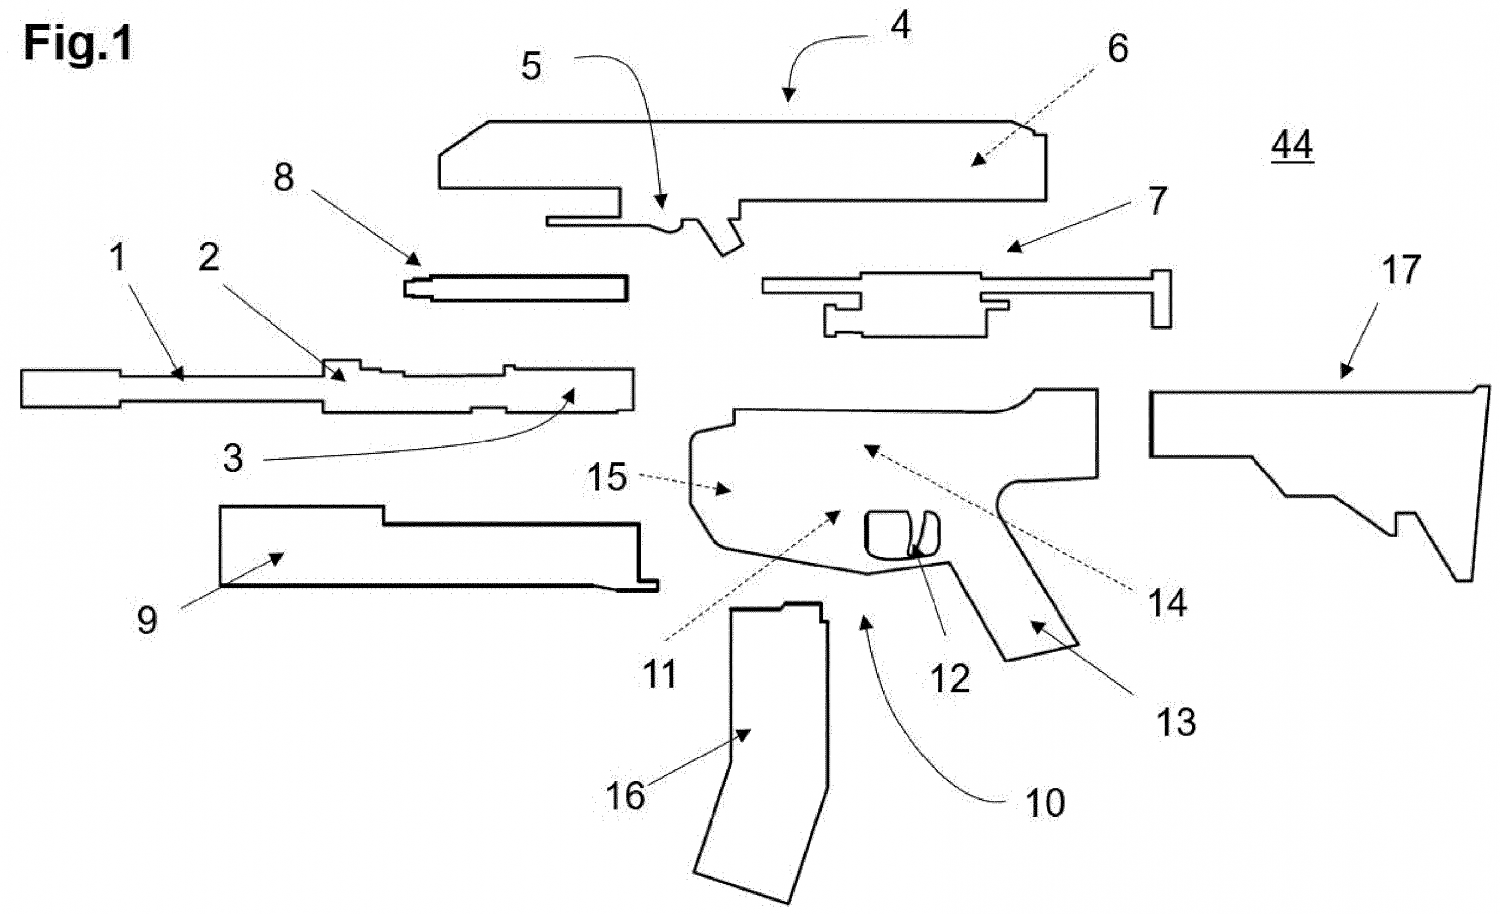 Glock's Rifle Patent